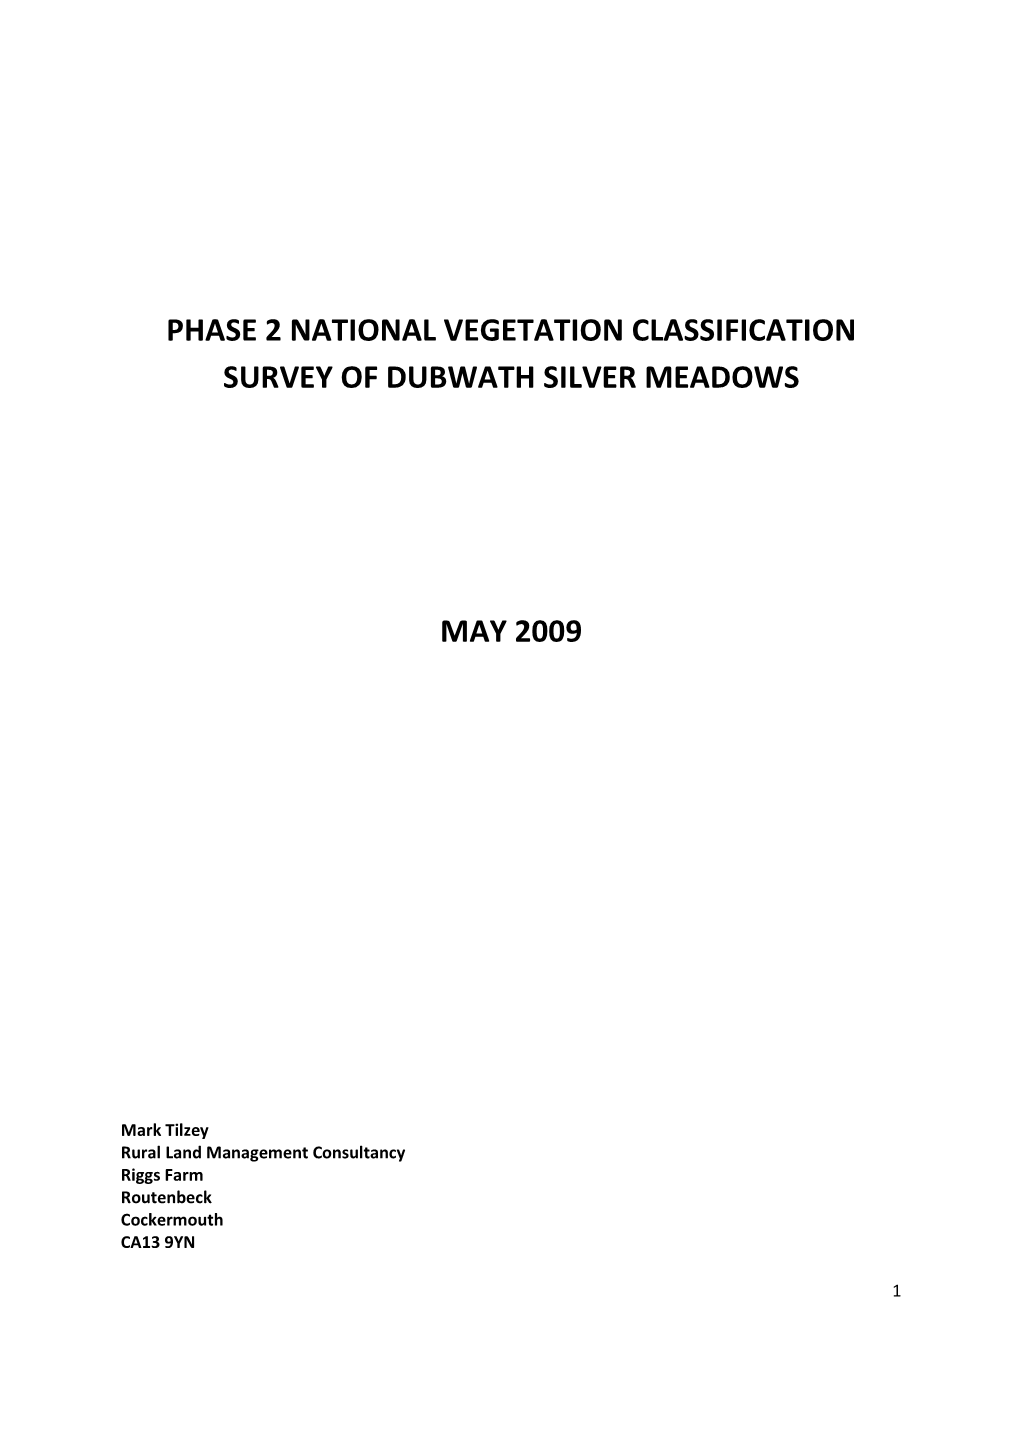 Phase 2 National Vegetation Classification Survey of Dubwath Silver Meadows